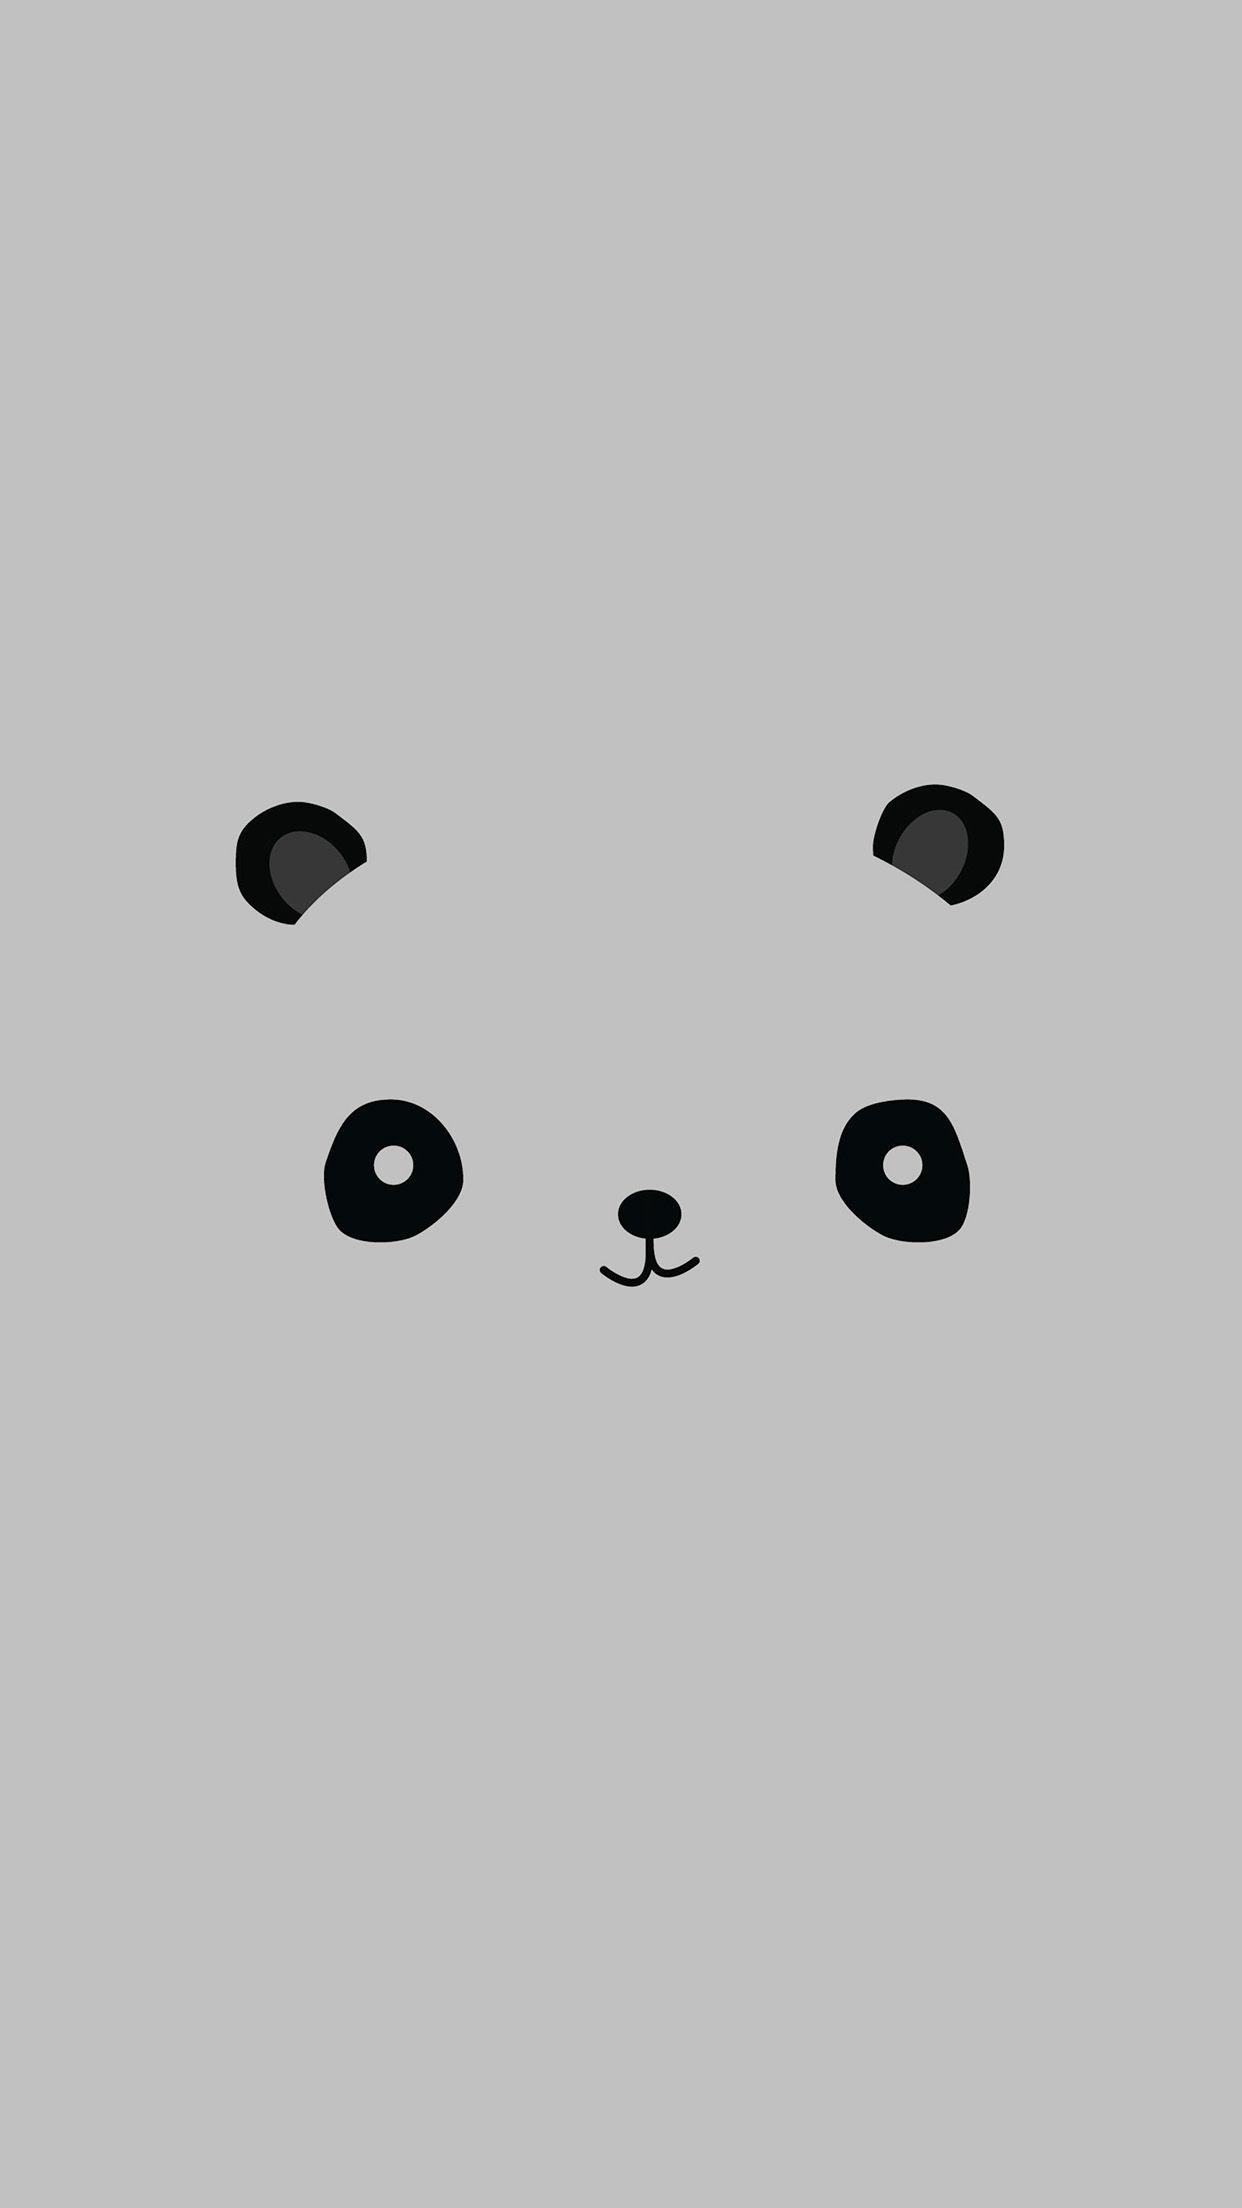 Cute Minimal Panda Android Wallpaper free download